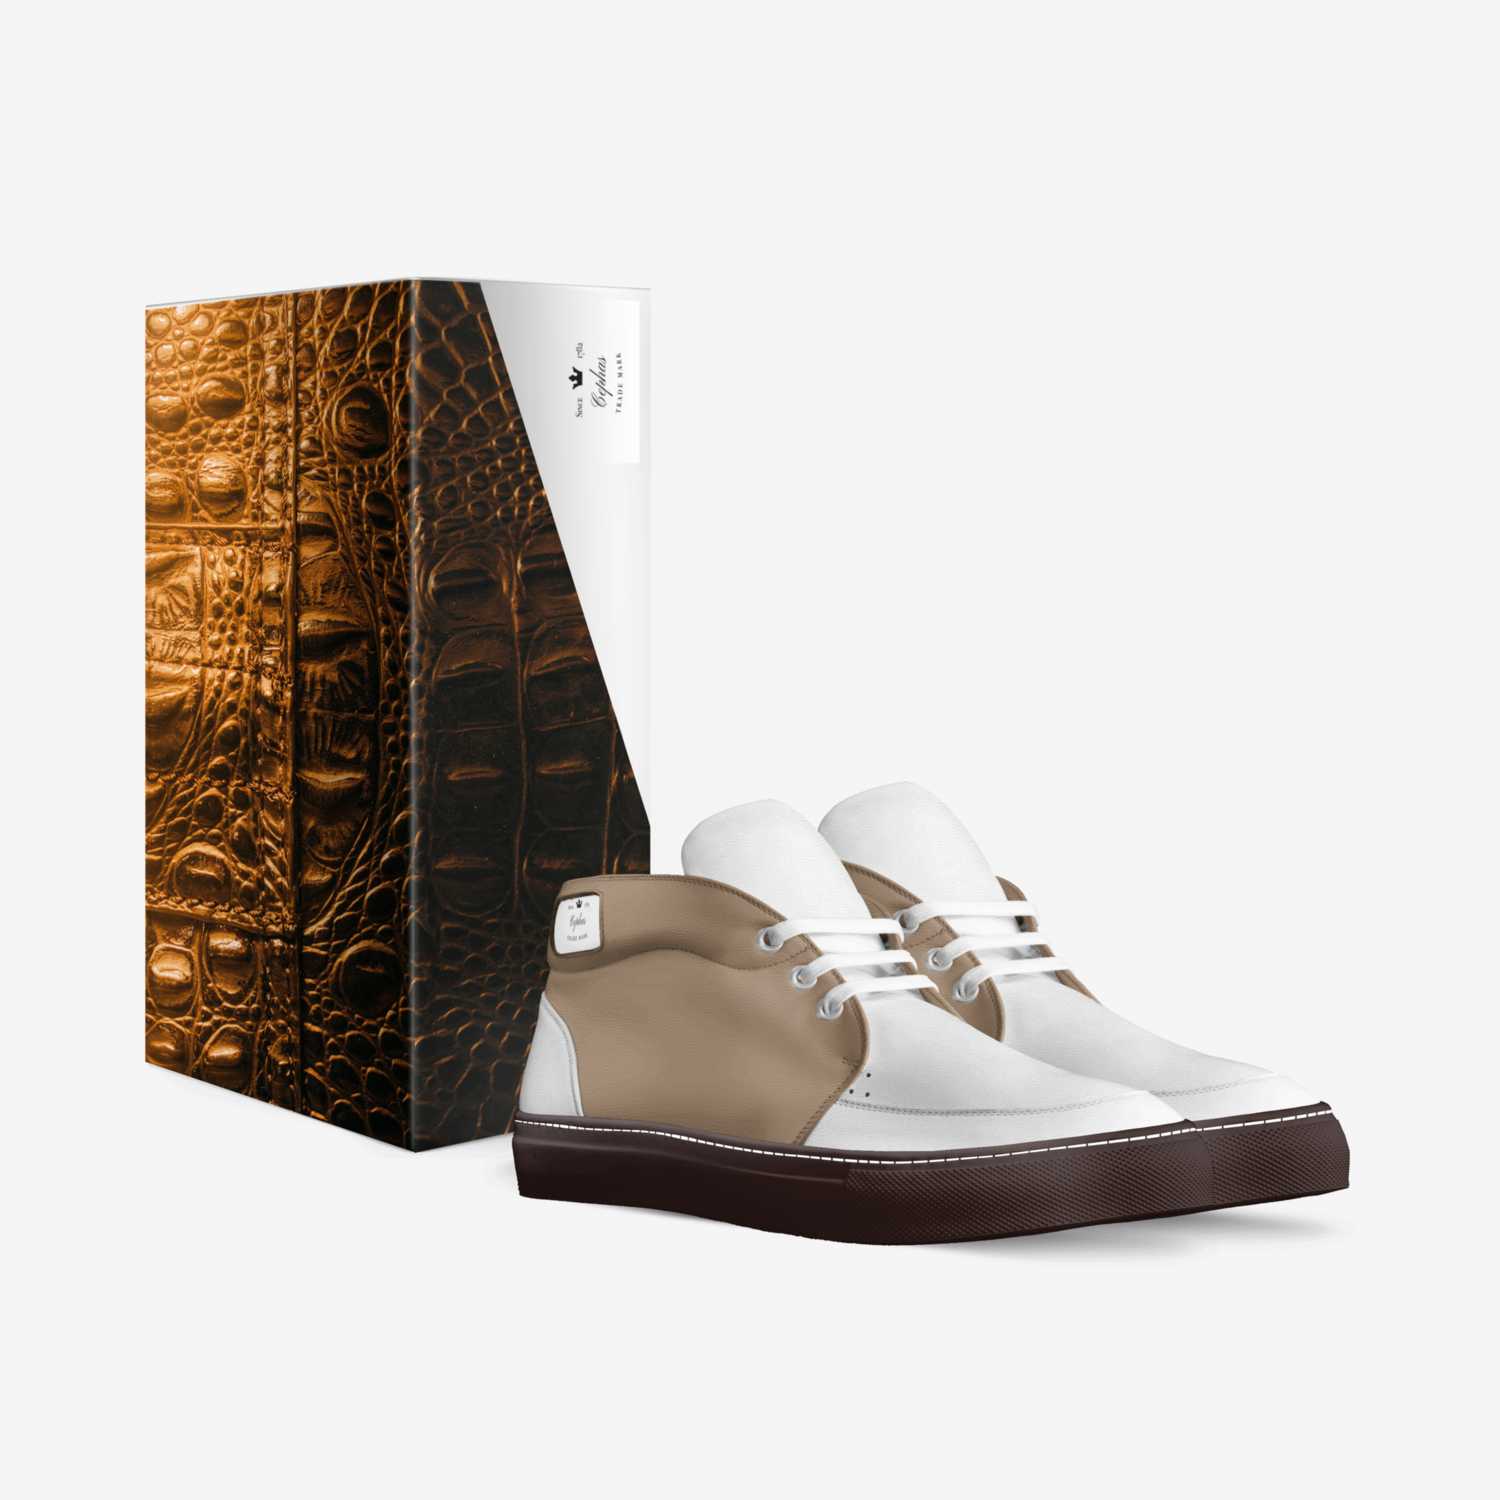 Cephas custom made in Italy shoes by Elliott Sephus | Box view